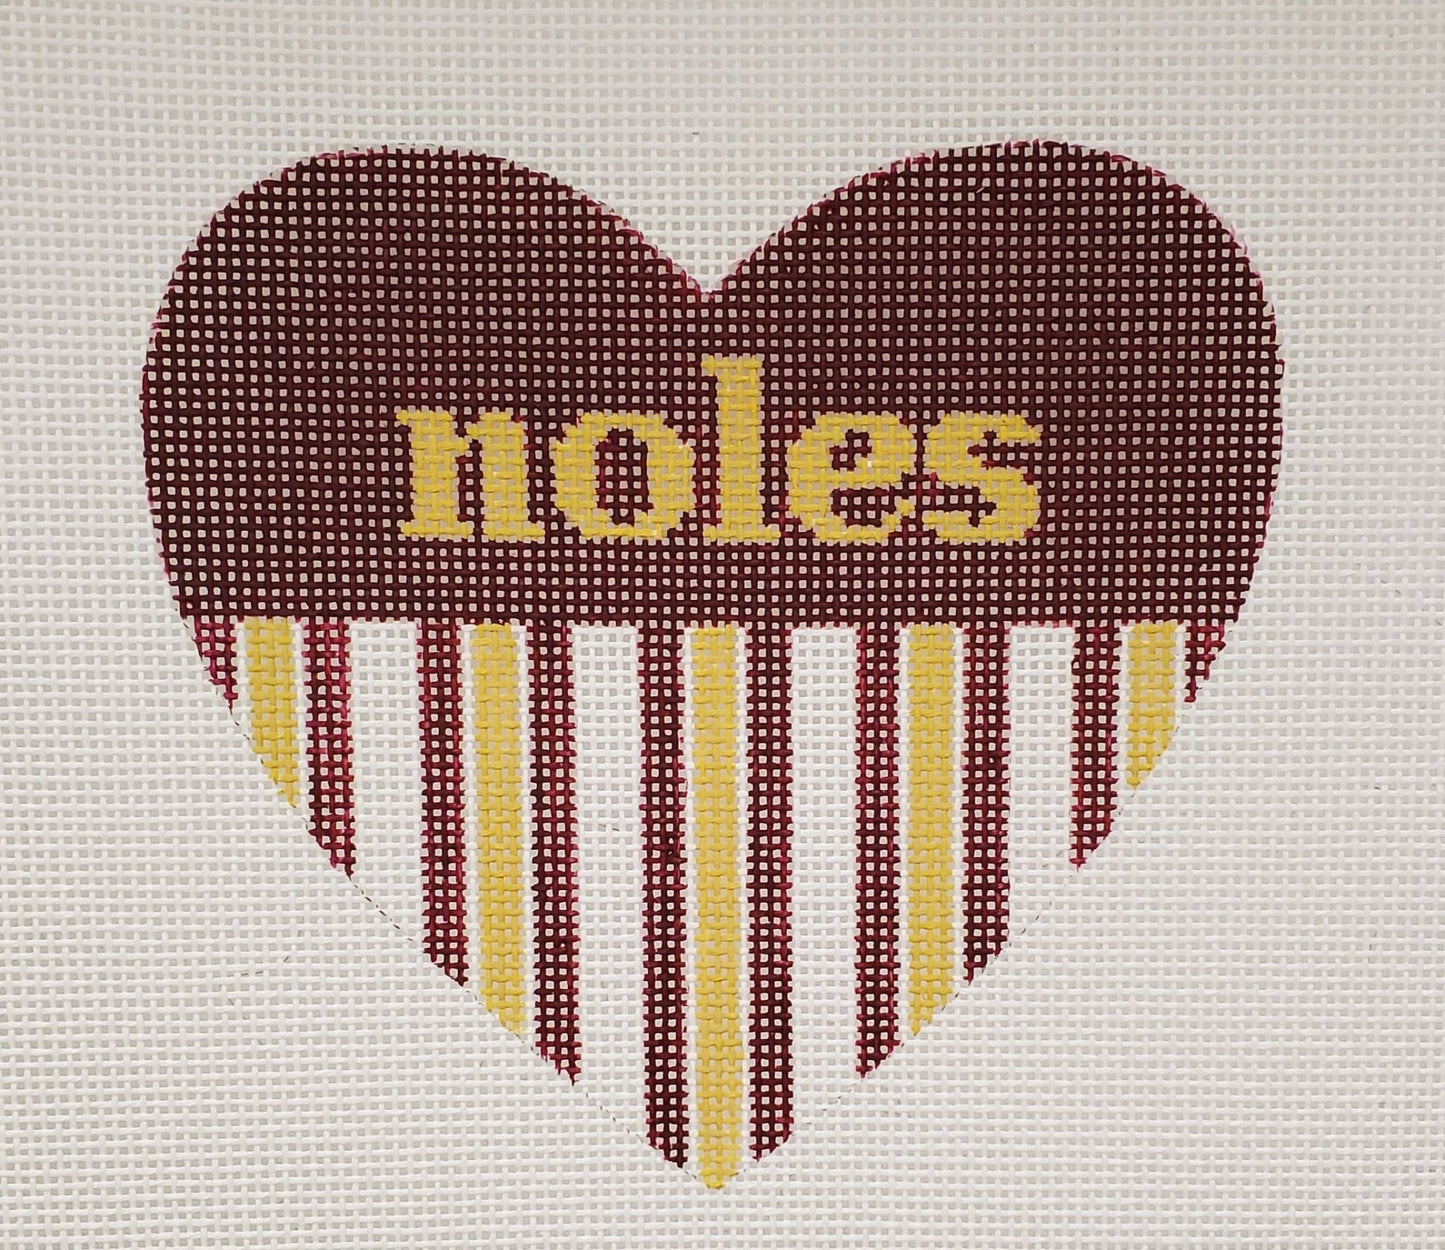 Noles Heart - The Flying Needles